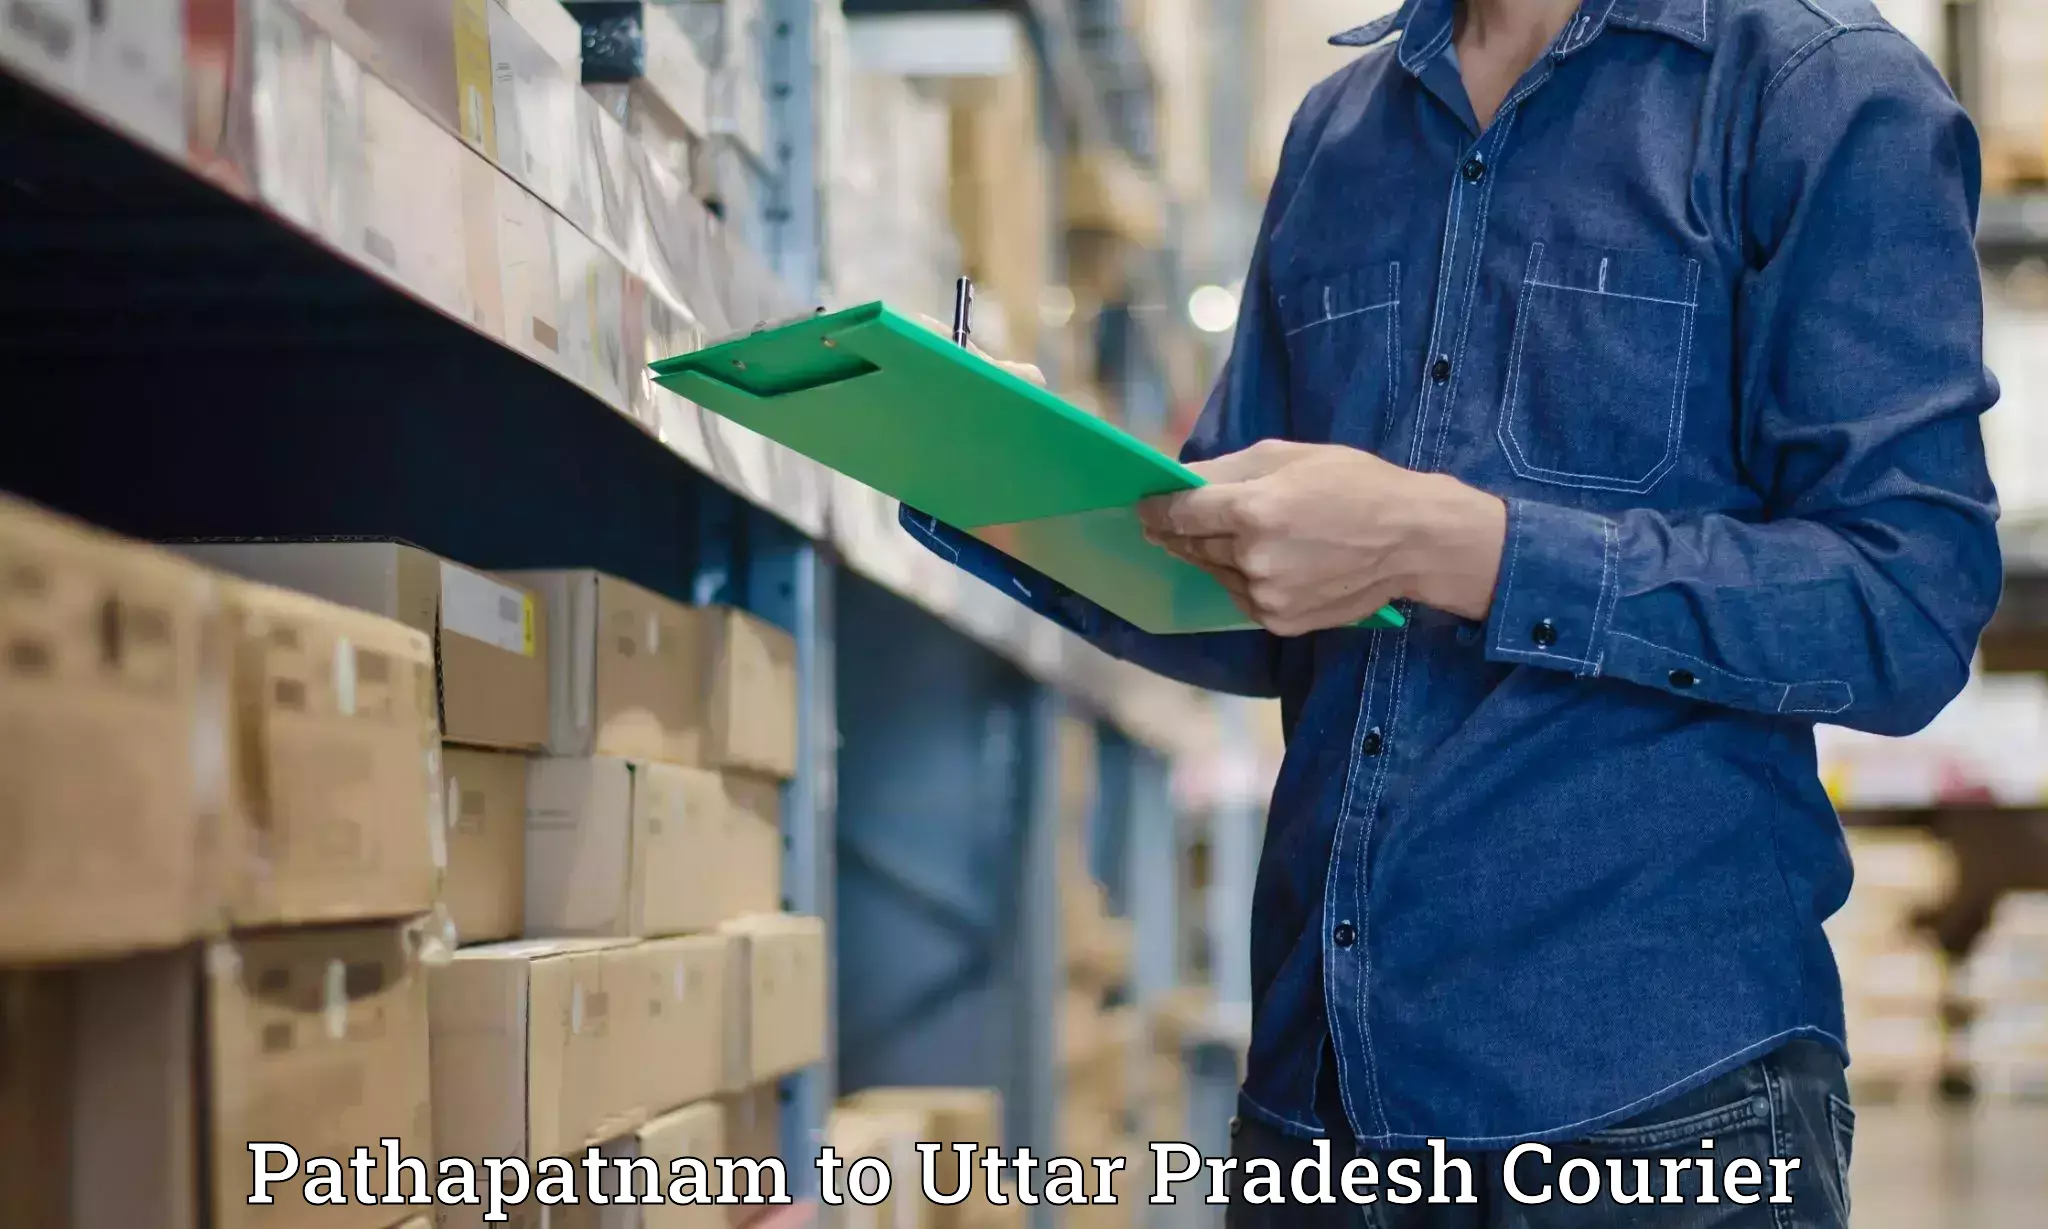 Speedy delivery service Pathapatnam to Uttar Pradesh